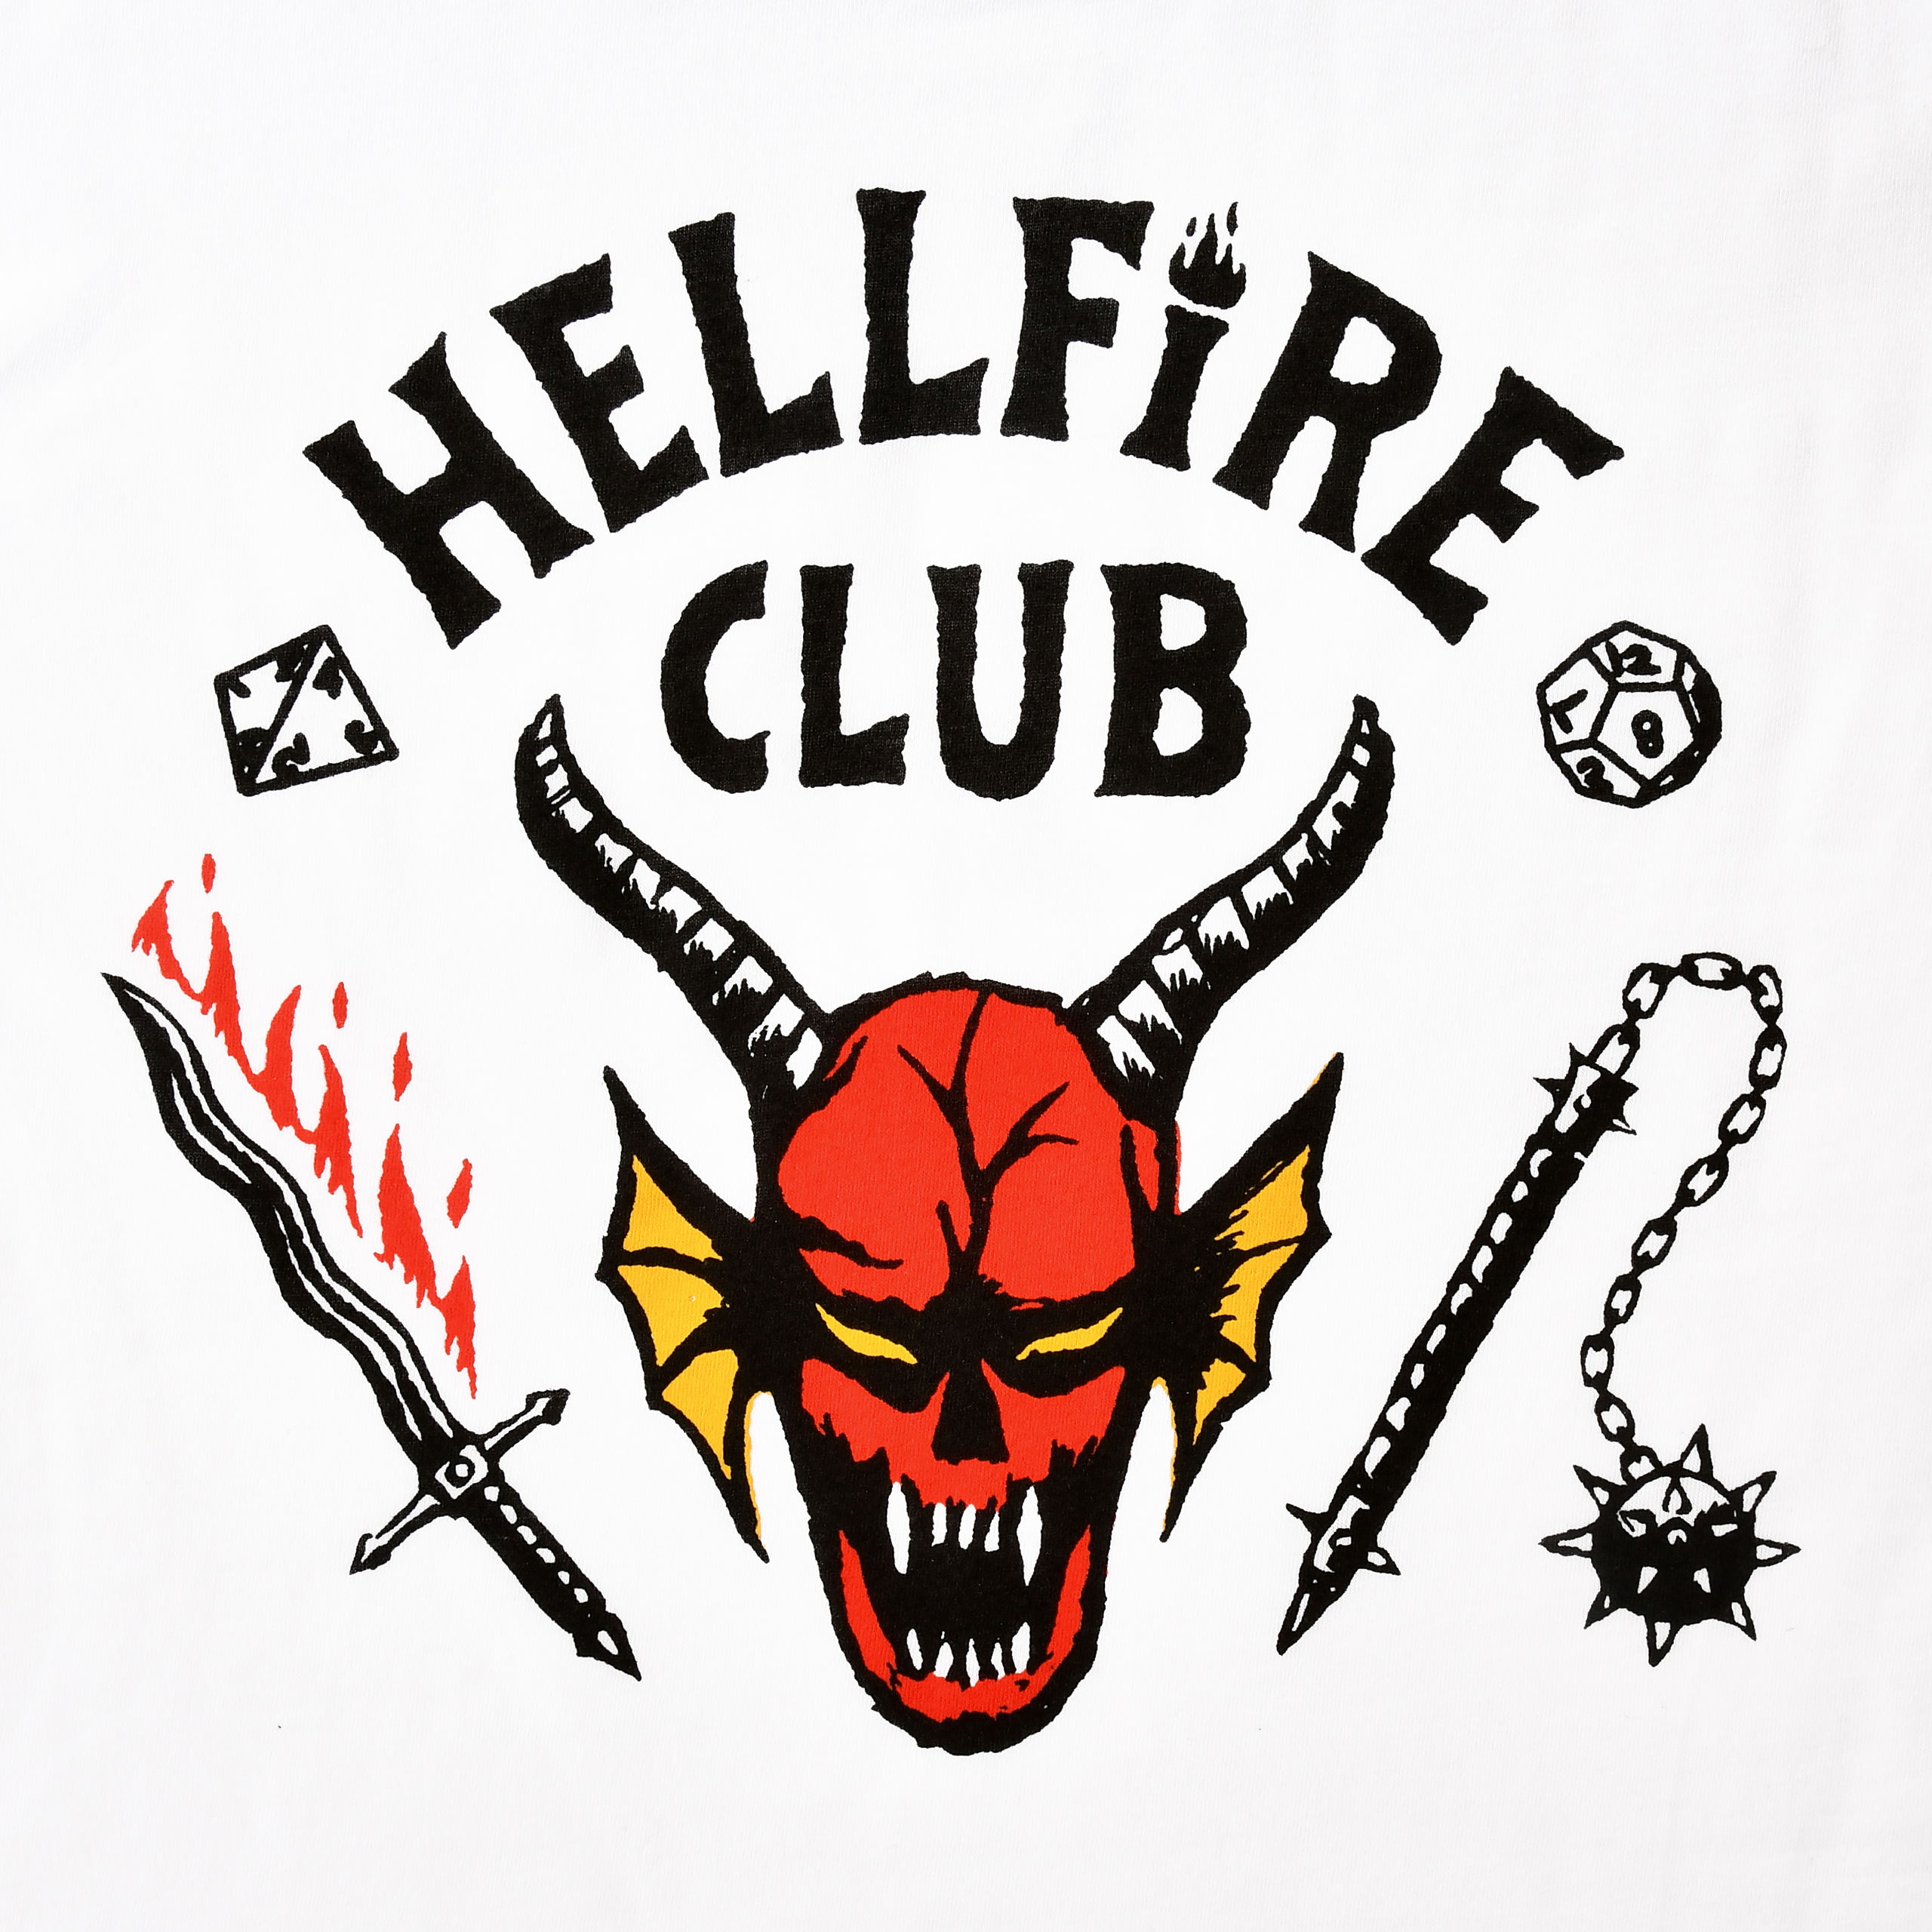 Stranger Things - Hellfire Club Logo T-Shirt weiß